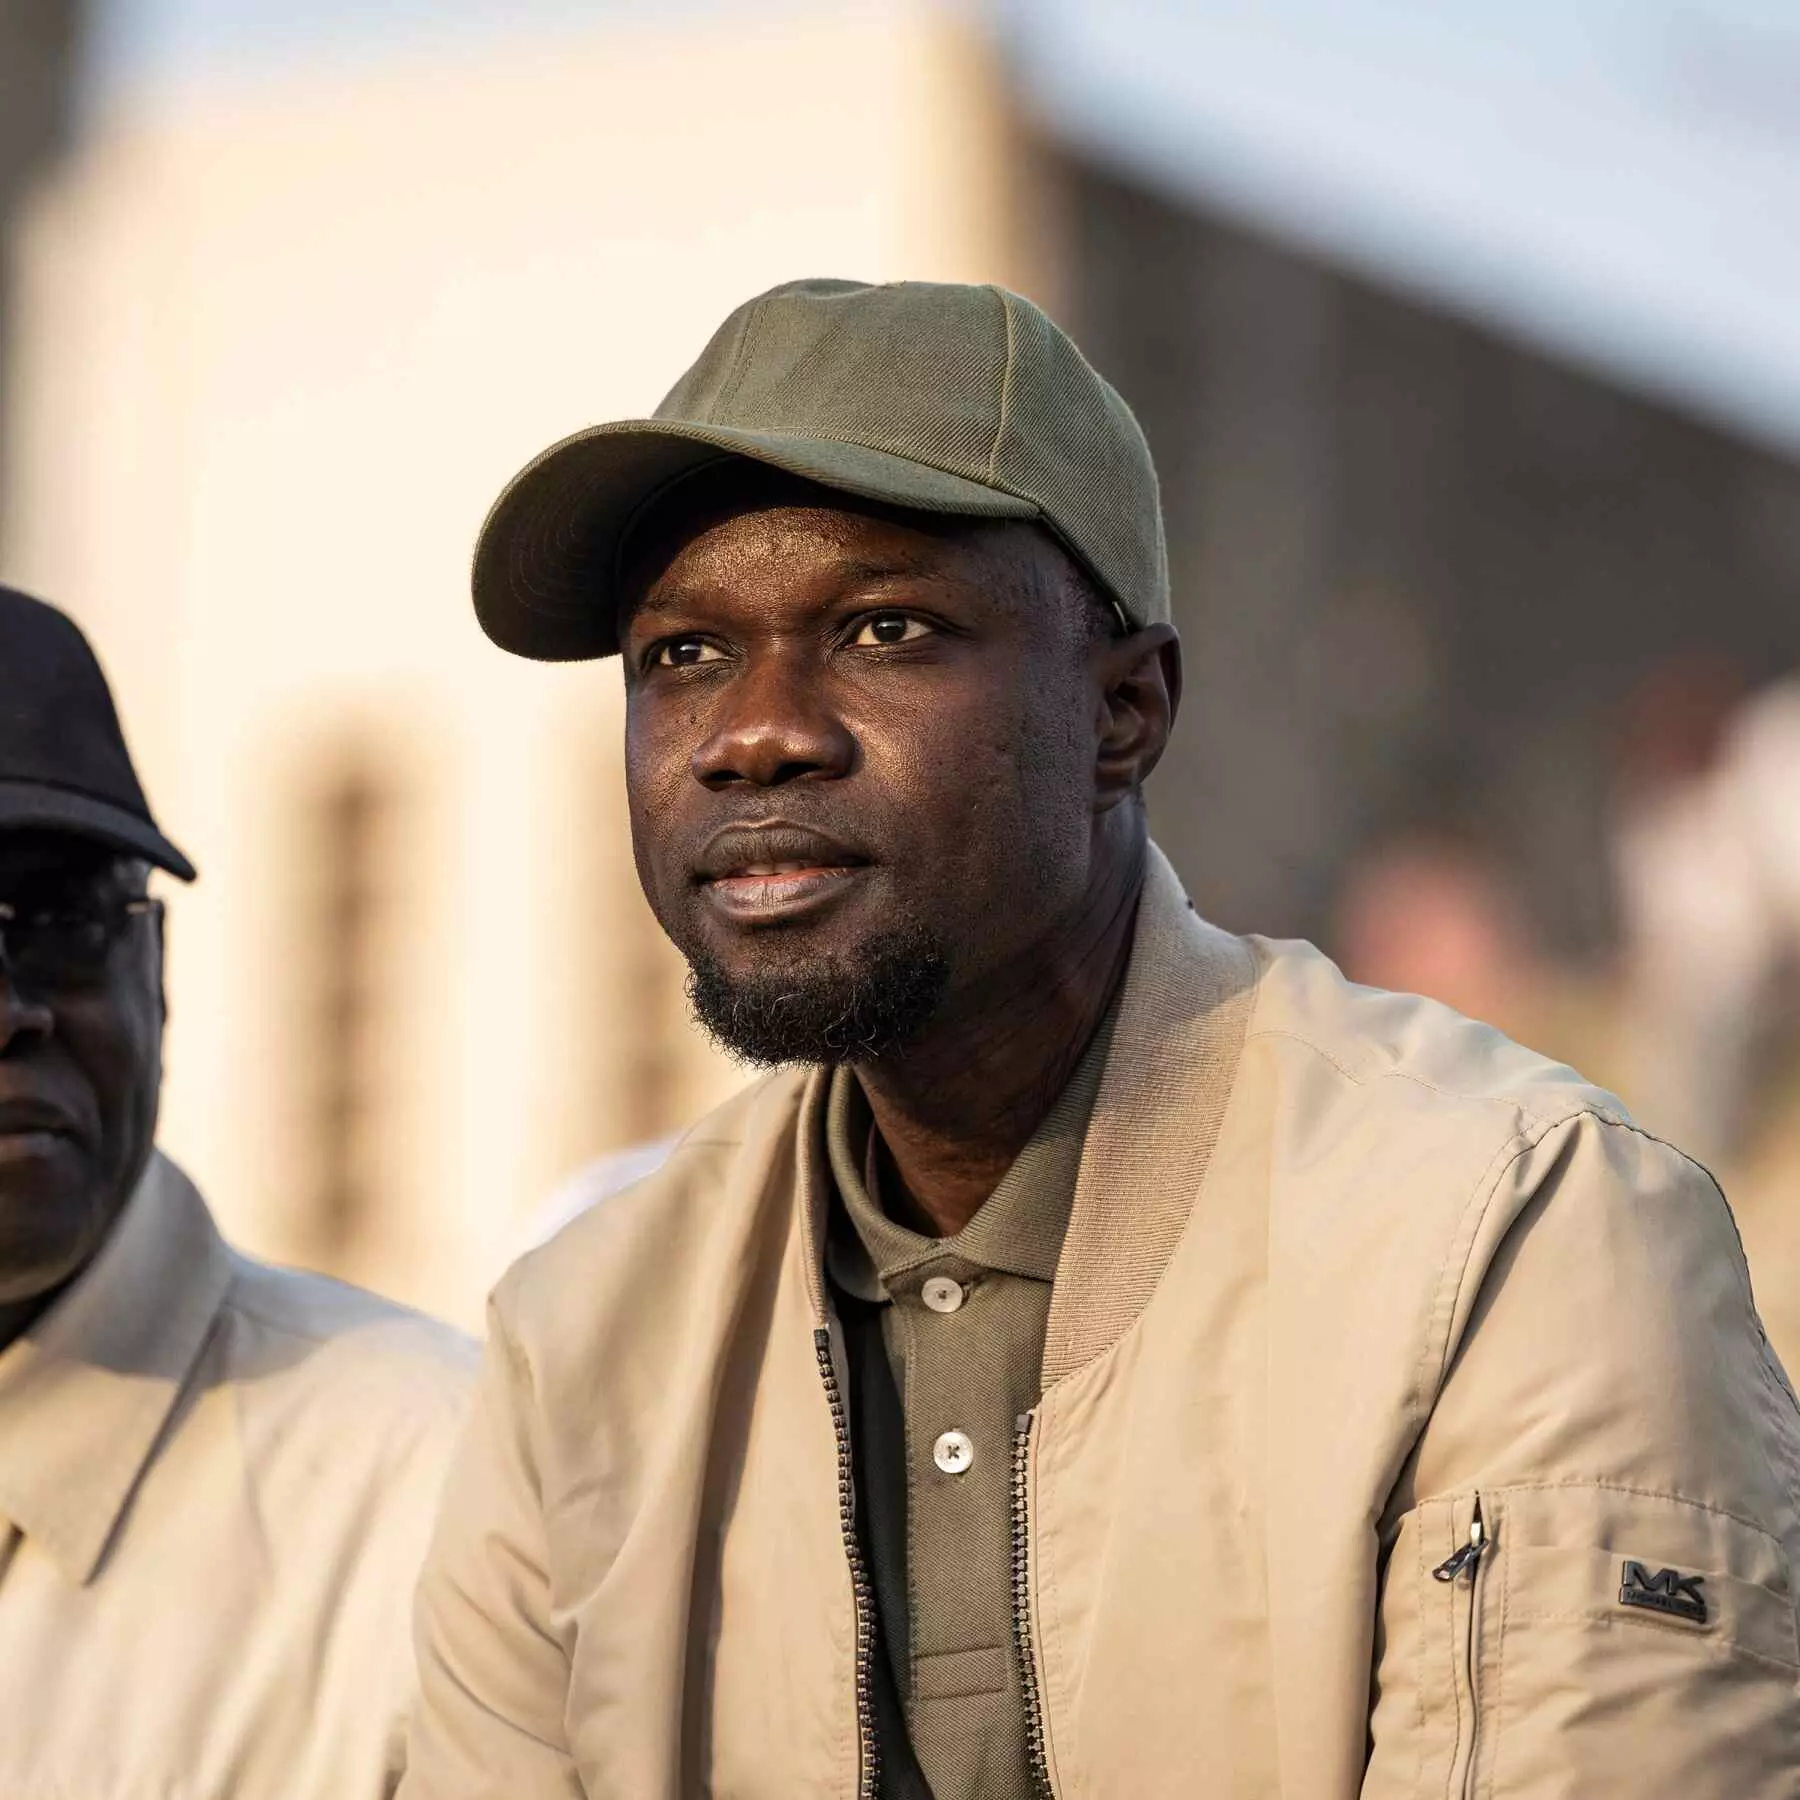 Senegal opposition leaders rape trial resumes amid unrest fears